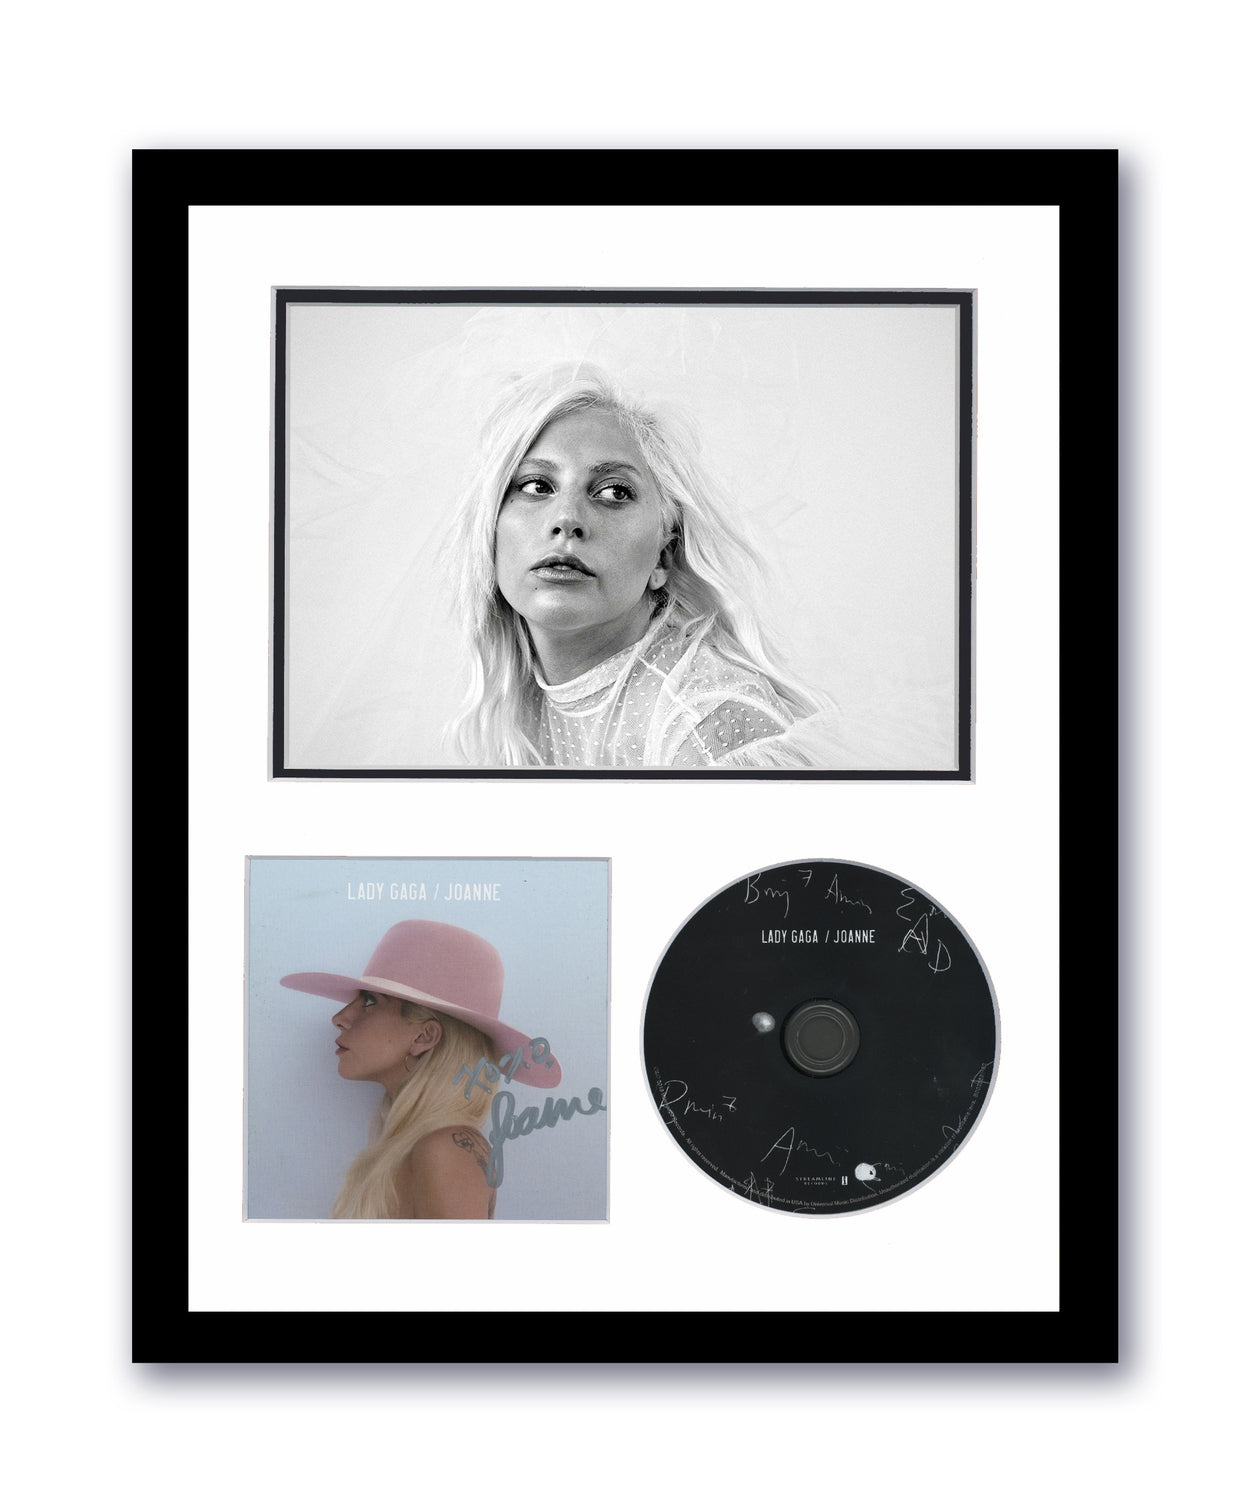 Lady Gaga Autographed Signed 11x14 Framed CD Photo Joanne ACOA 4